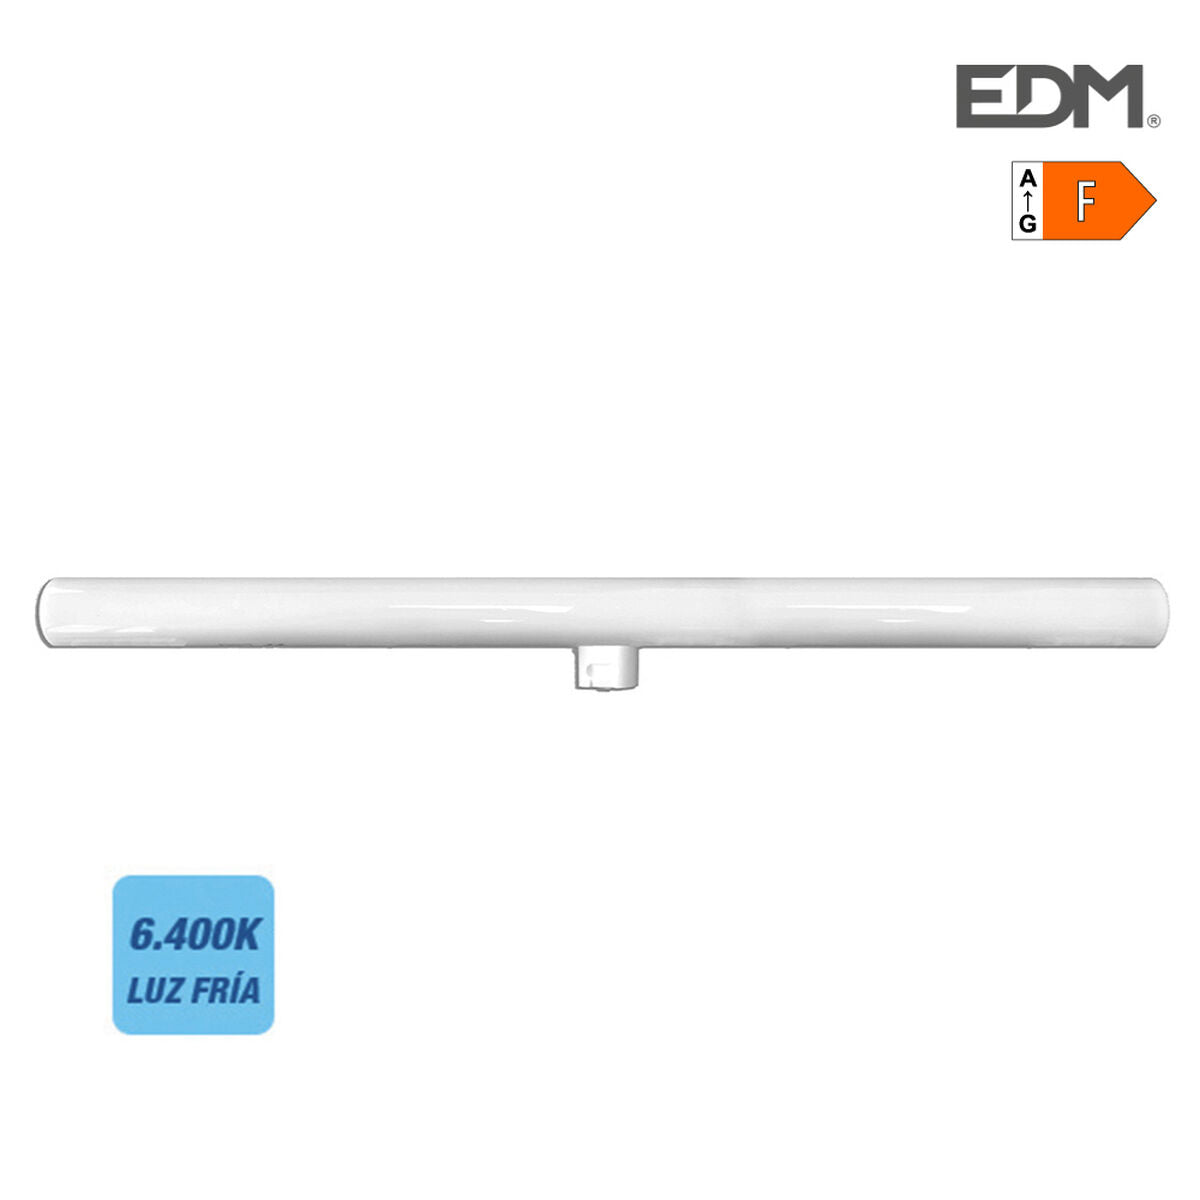 Tubo LED EDM 9 W F 700 lm (6400K)